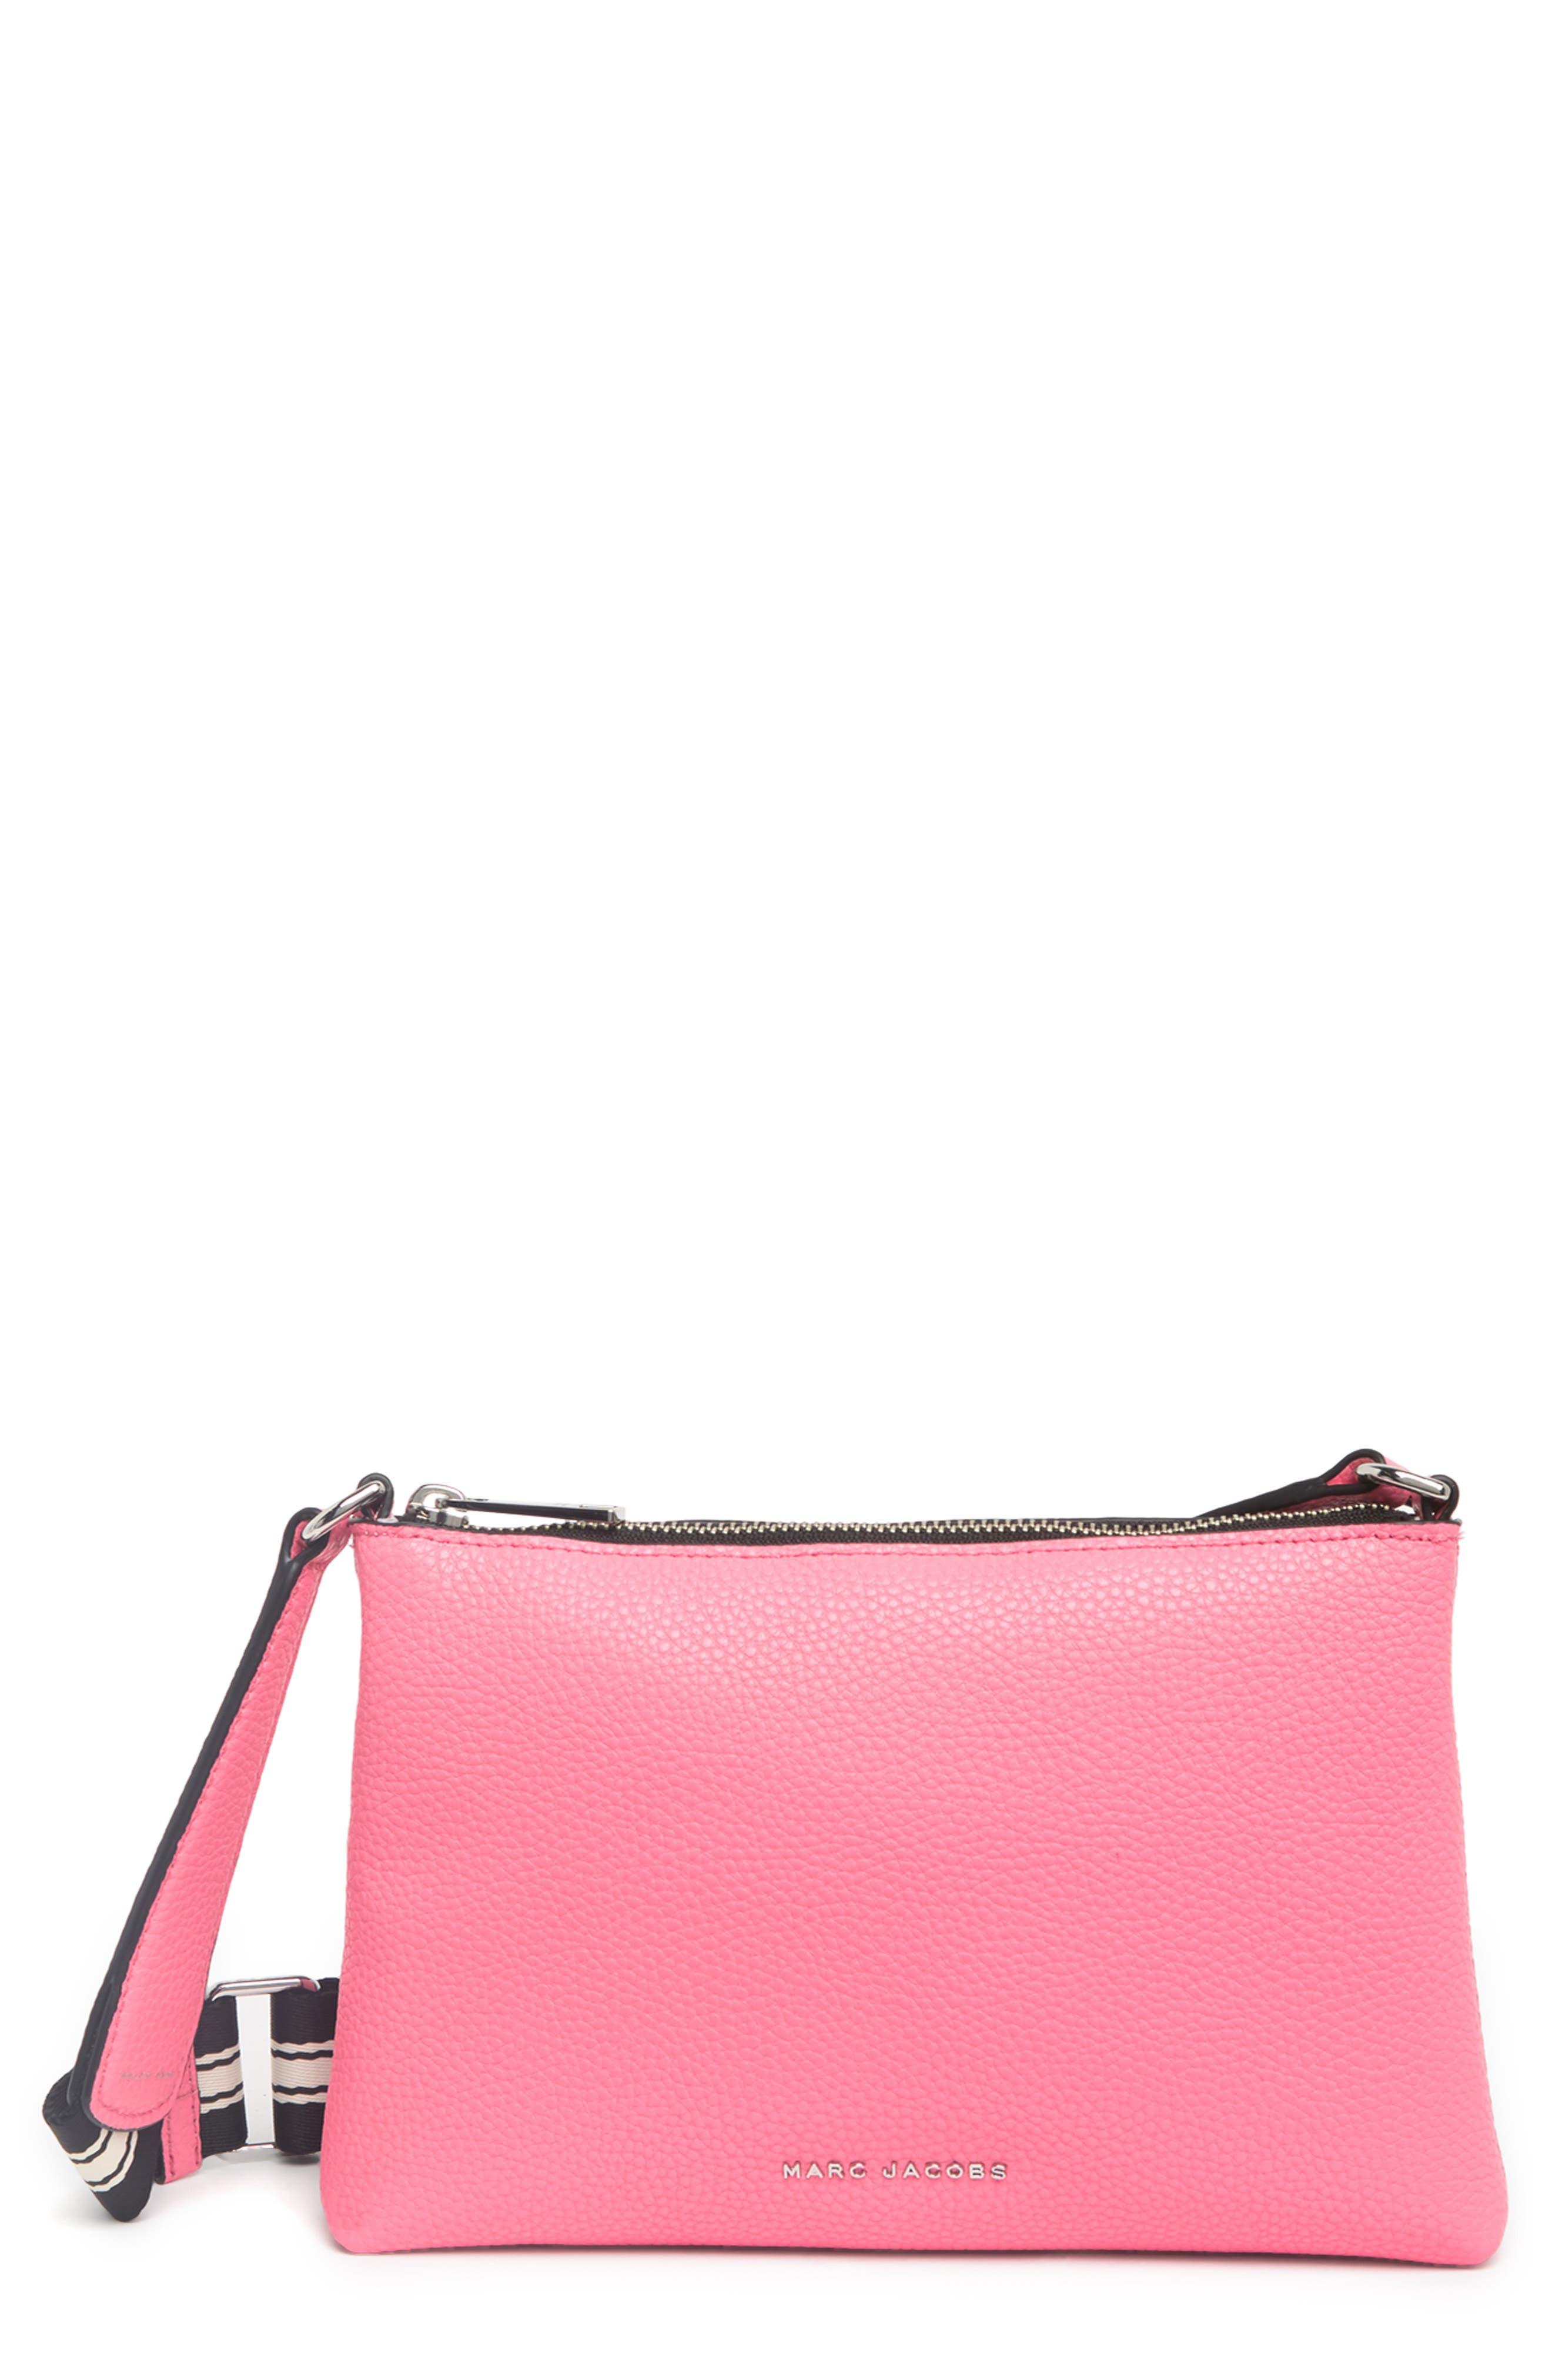 NORDSTROM Womens Fuchsia Pink Genuine Leather Handbag Purse | eBay